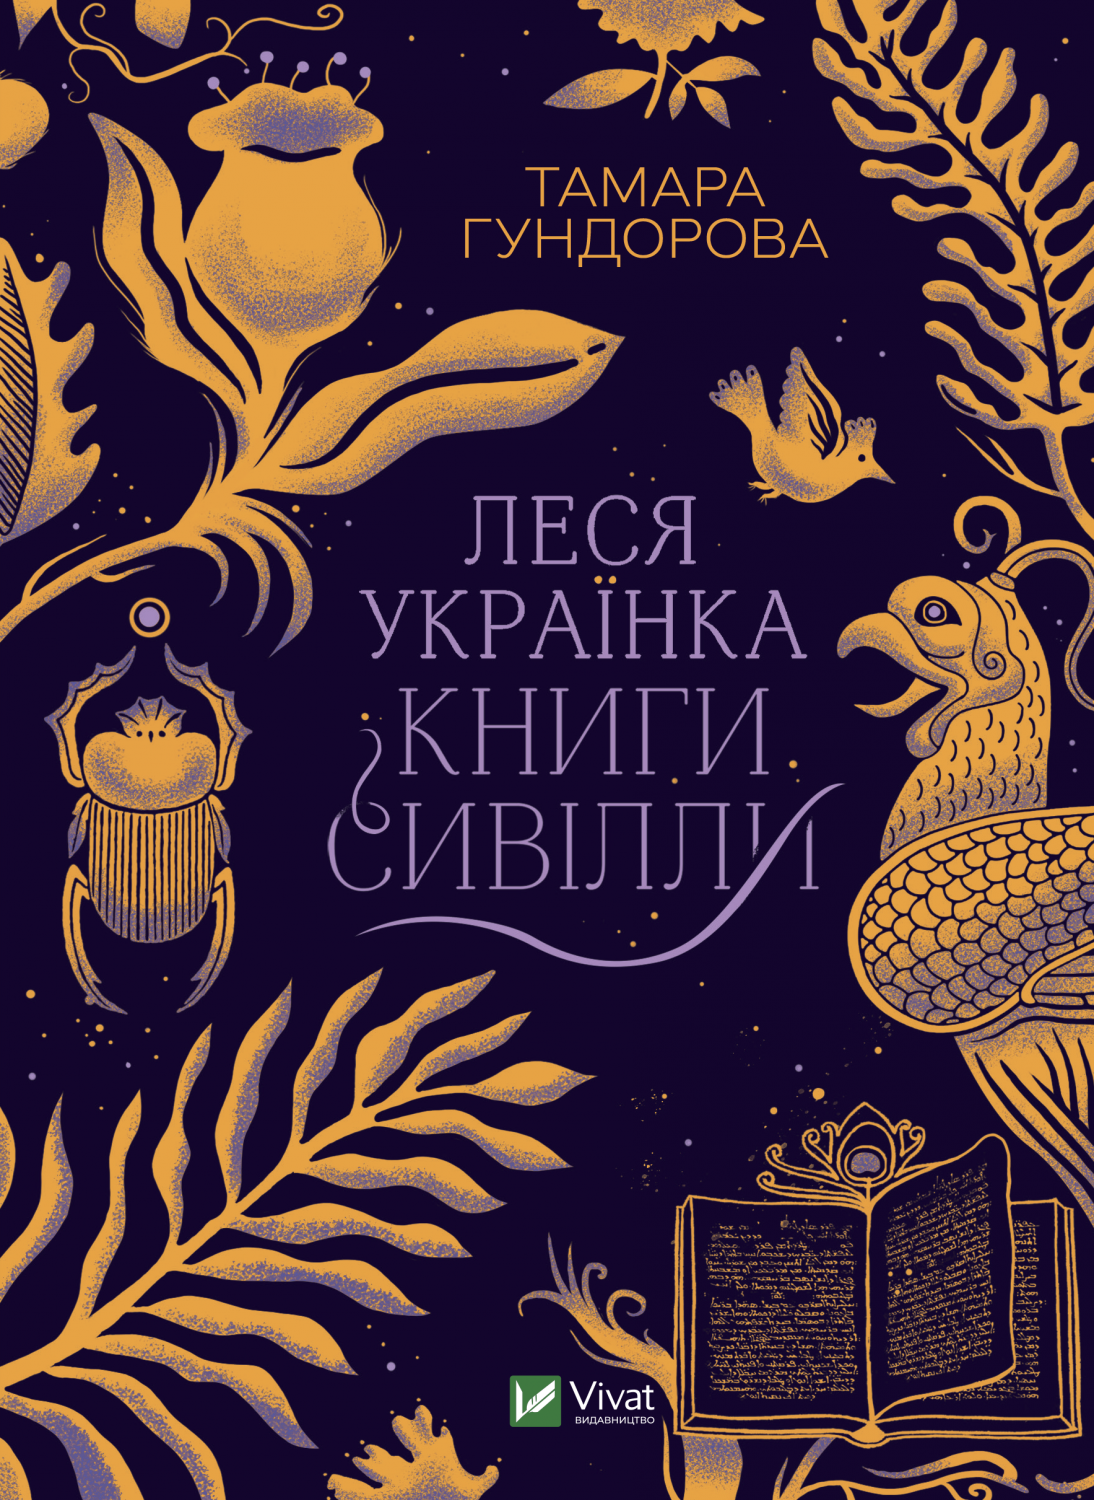 Електронна книга «Леся Українка. Книги Сивілли» - Vivat